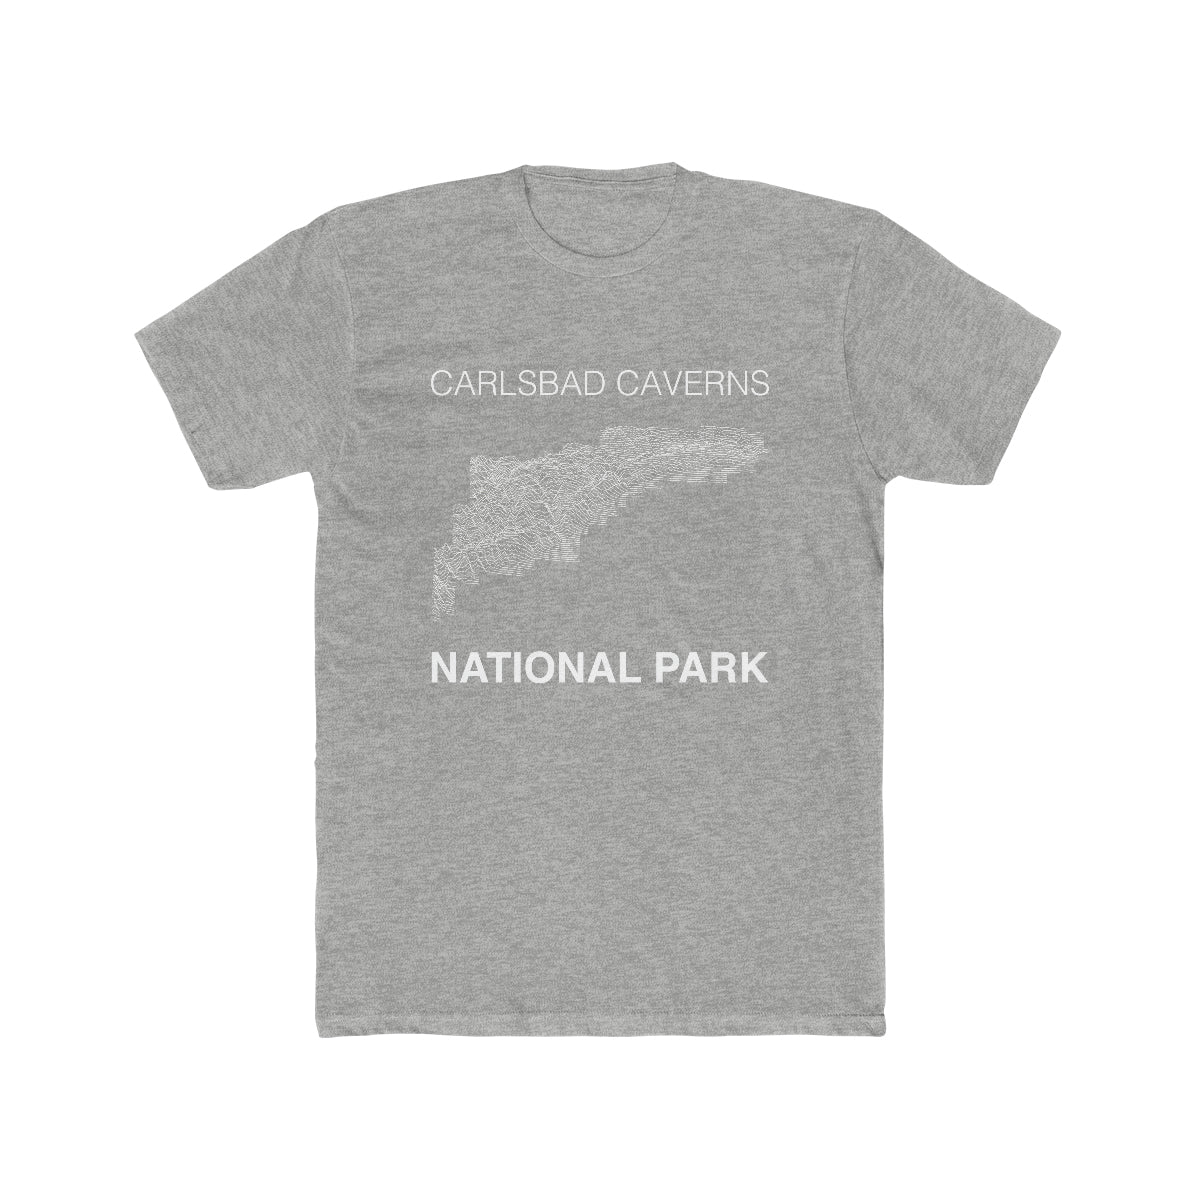 Carlsbad Caverns National Park T-Shirt Lines